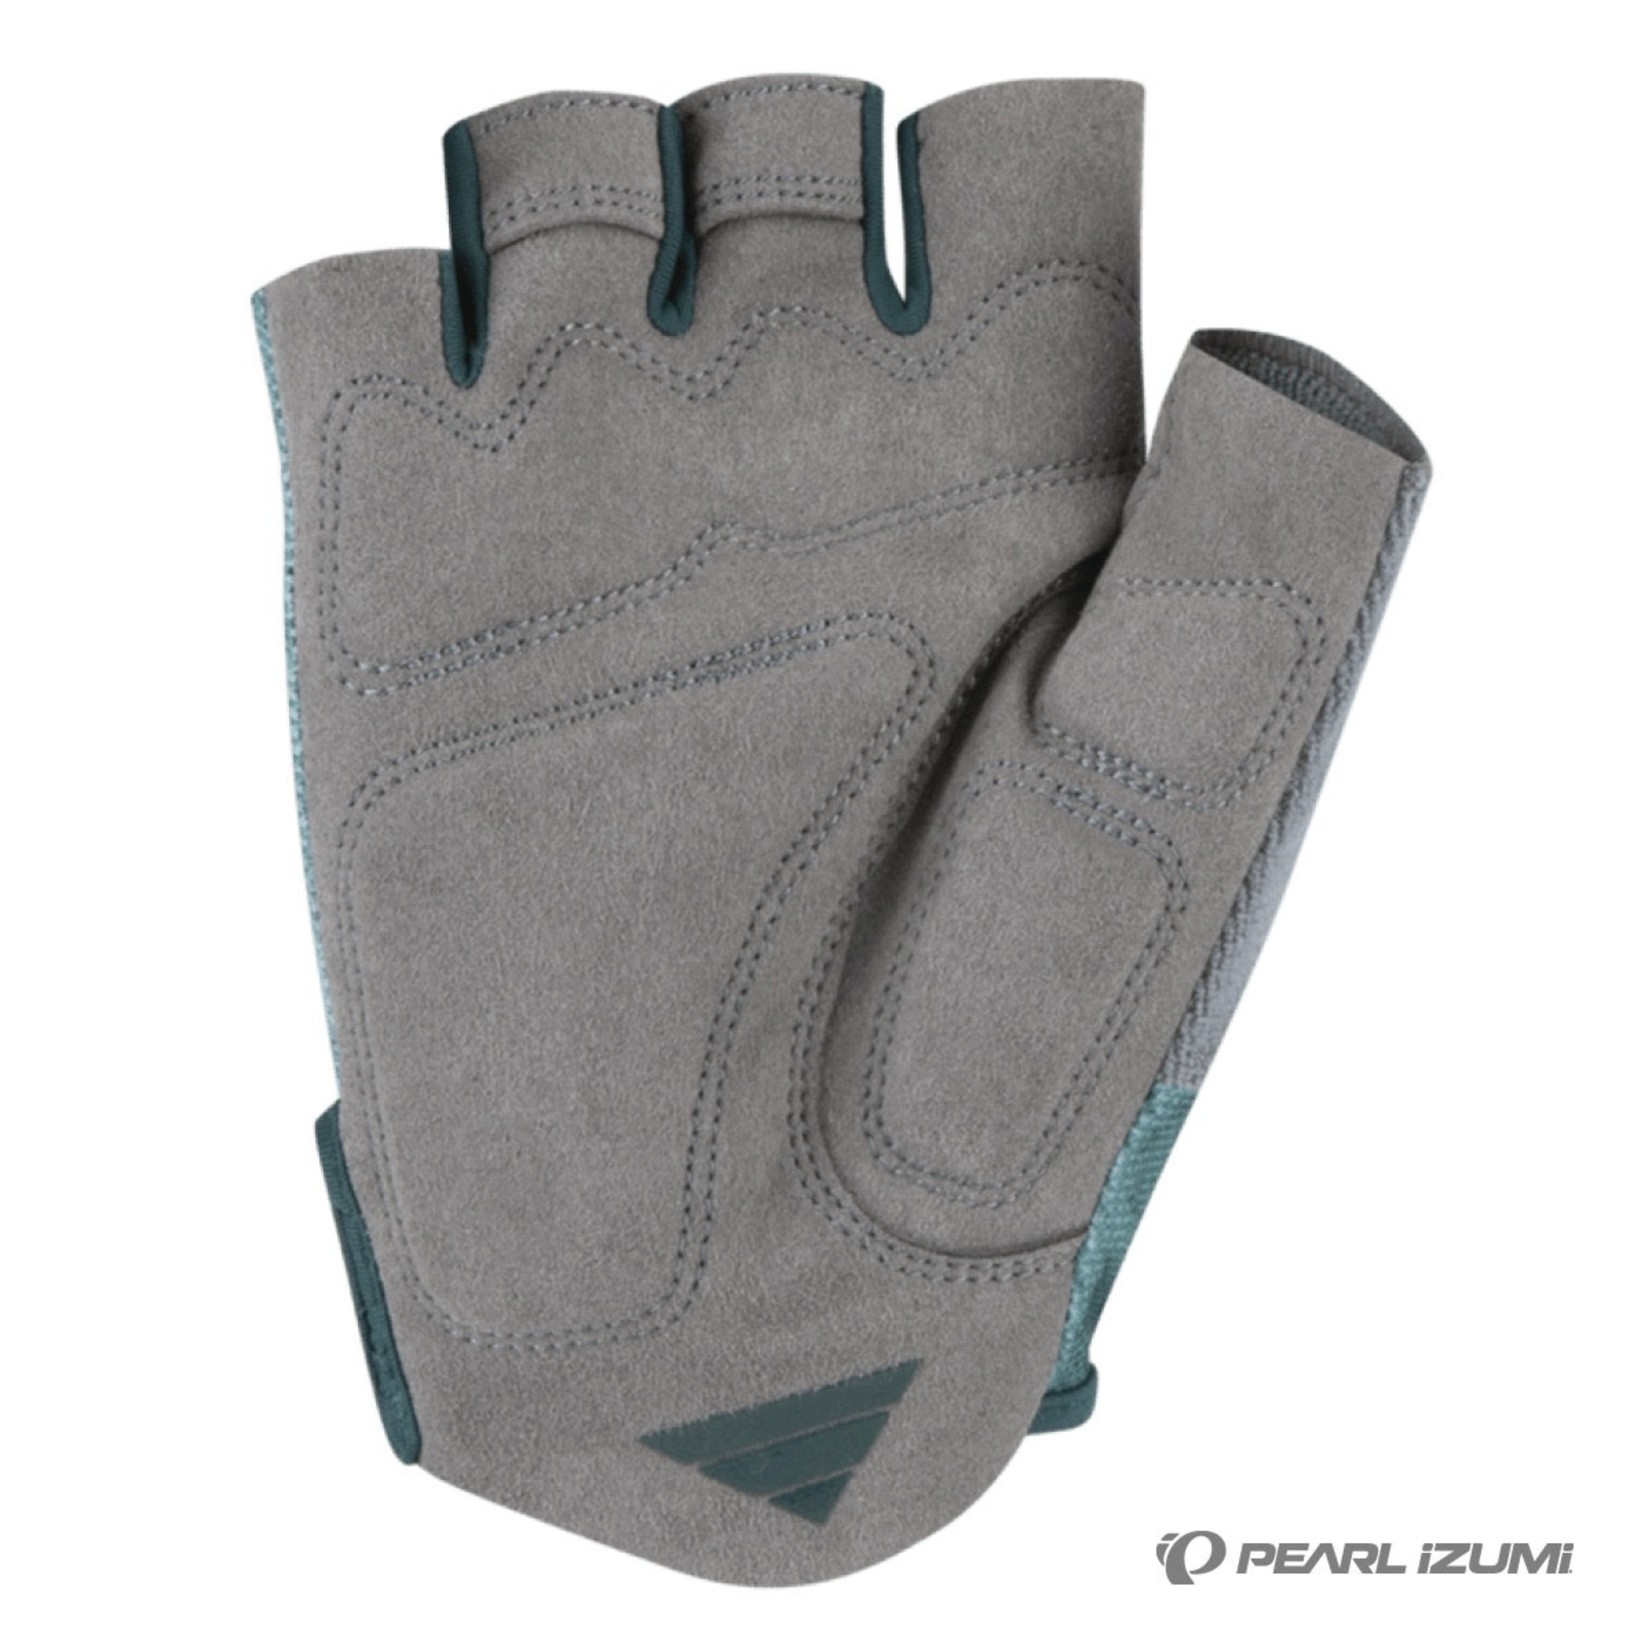 Pearl Izumi Pearl Izumi Select Bike Gloves - Pale Pine/Pine Hatch Palm - Medium